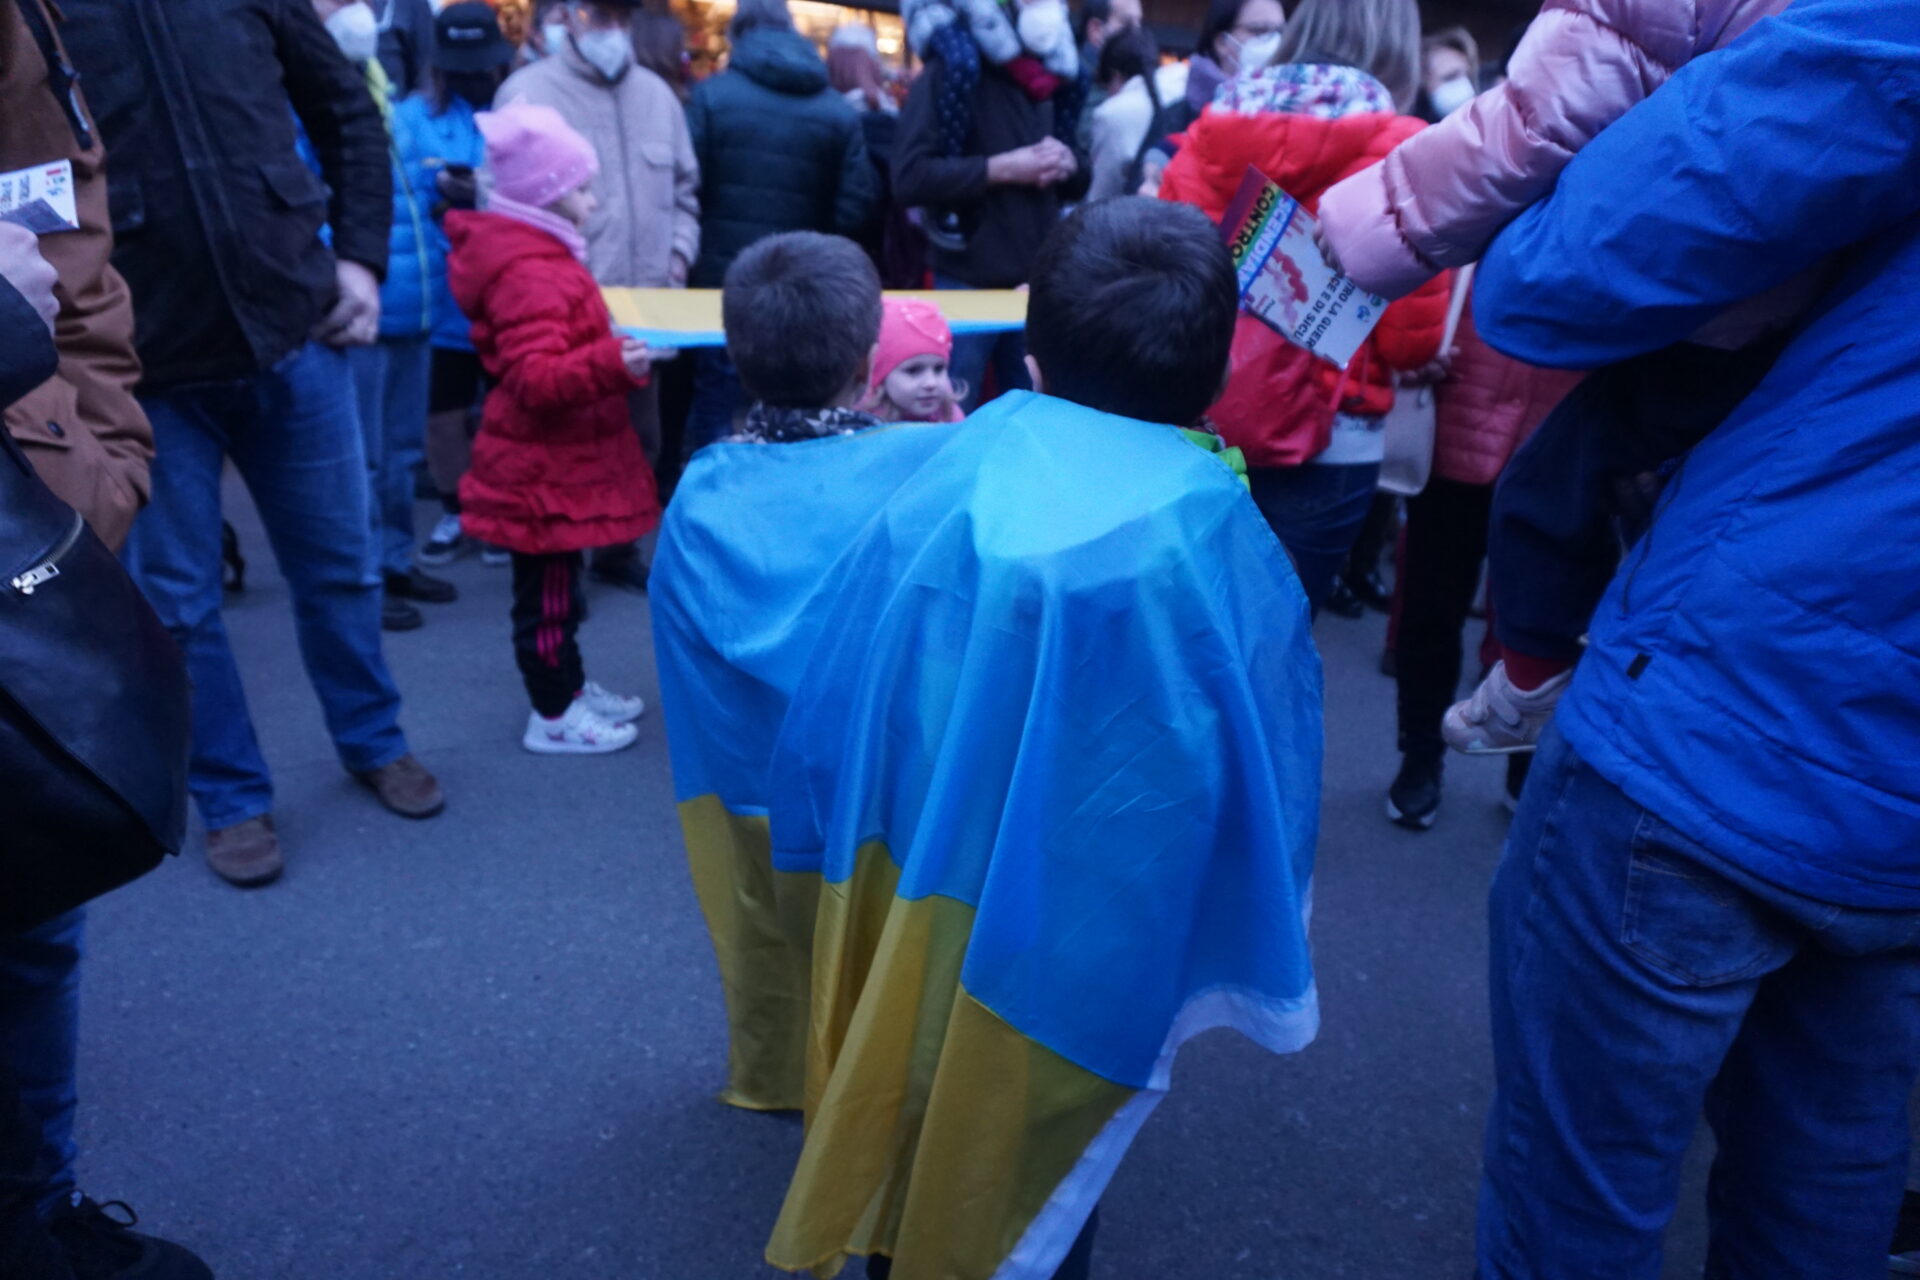 Manifestazione no alla guerra Ucraina - Russia Aosta